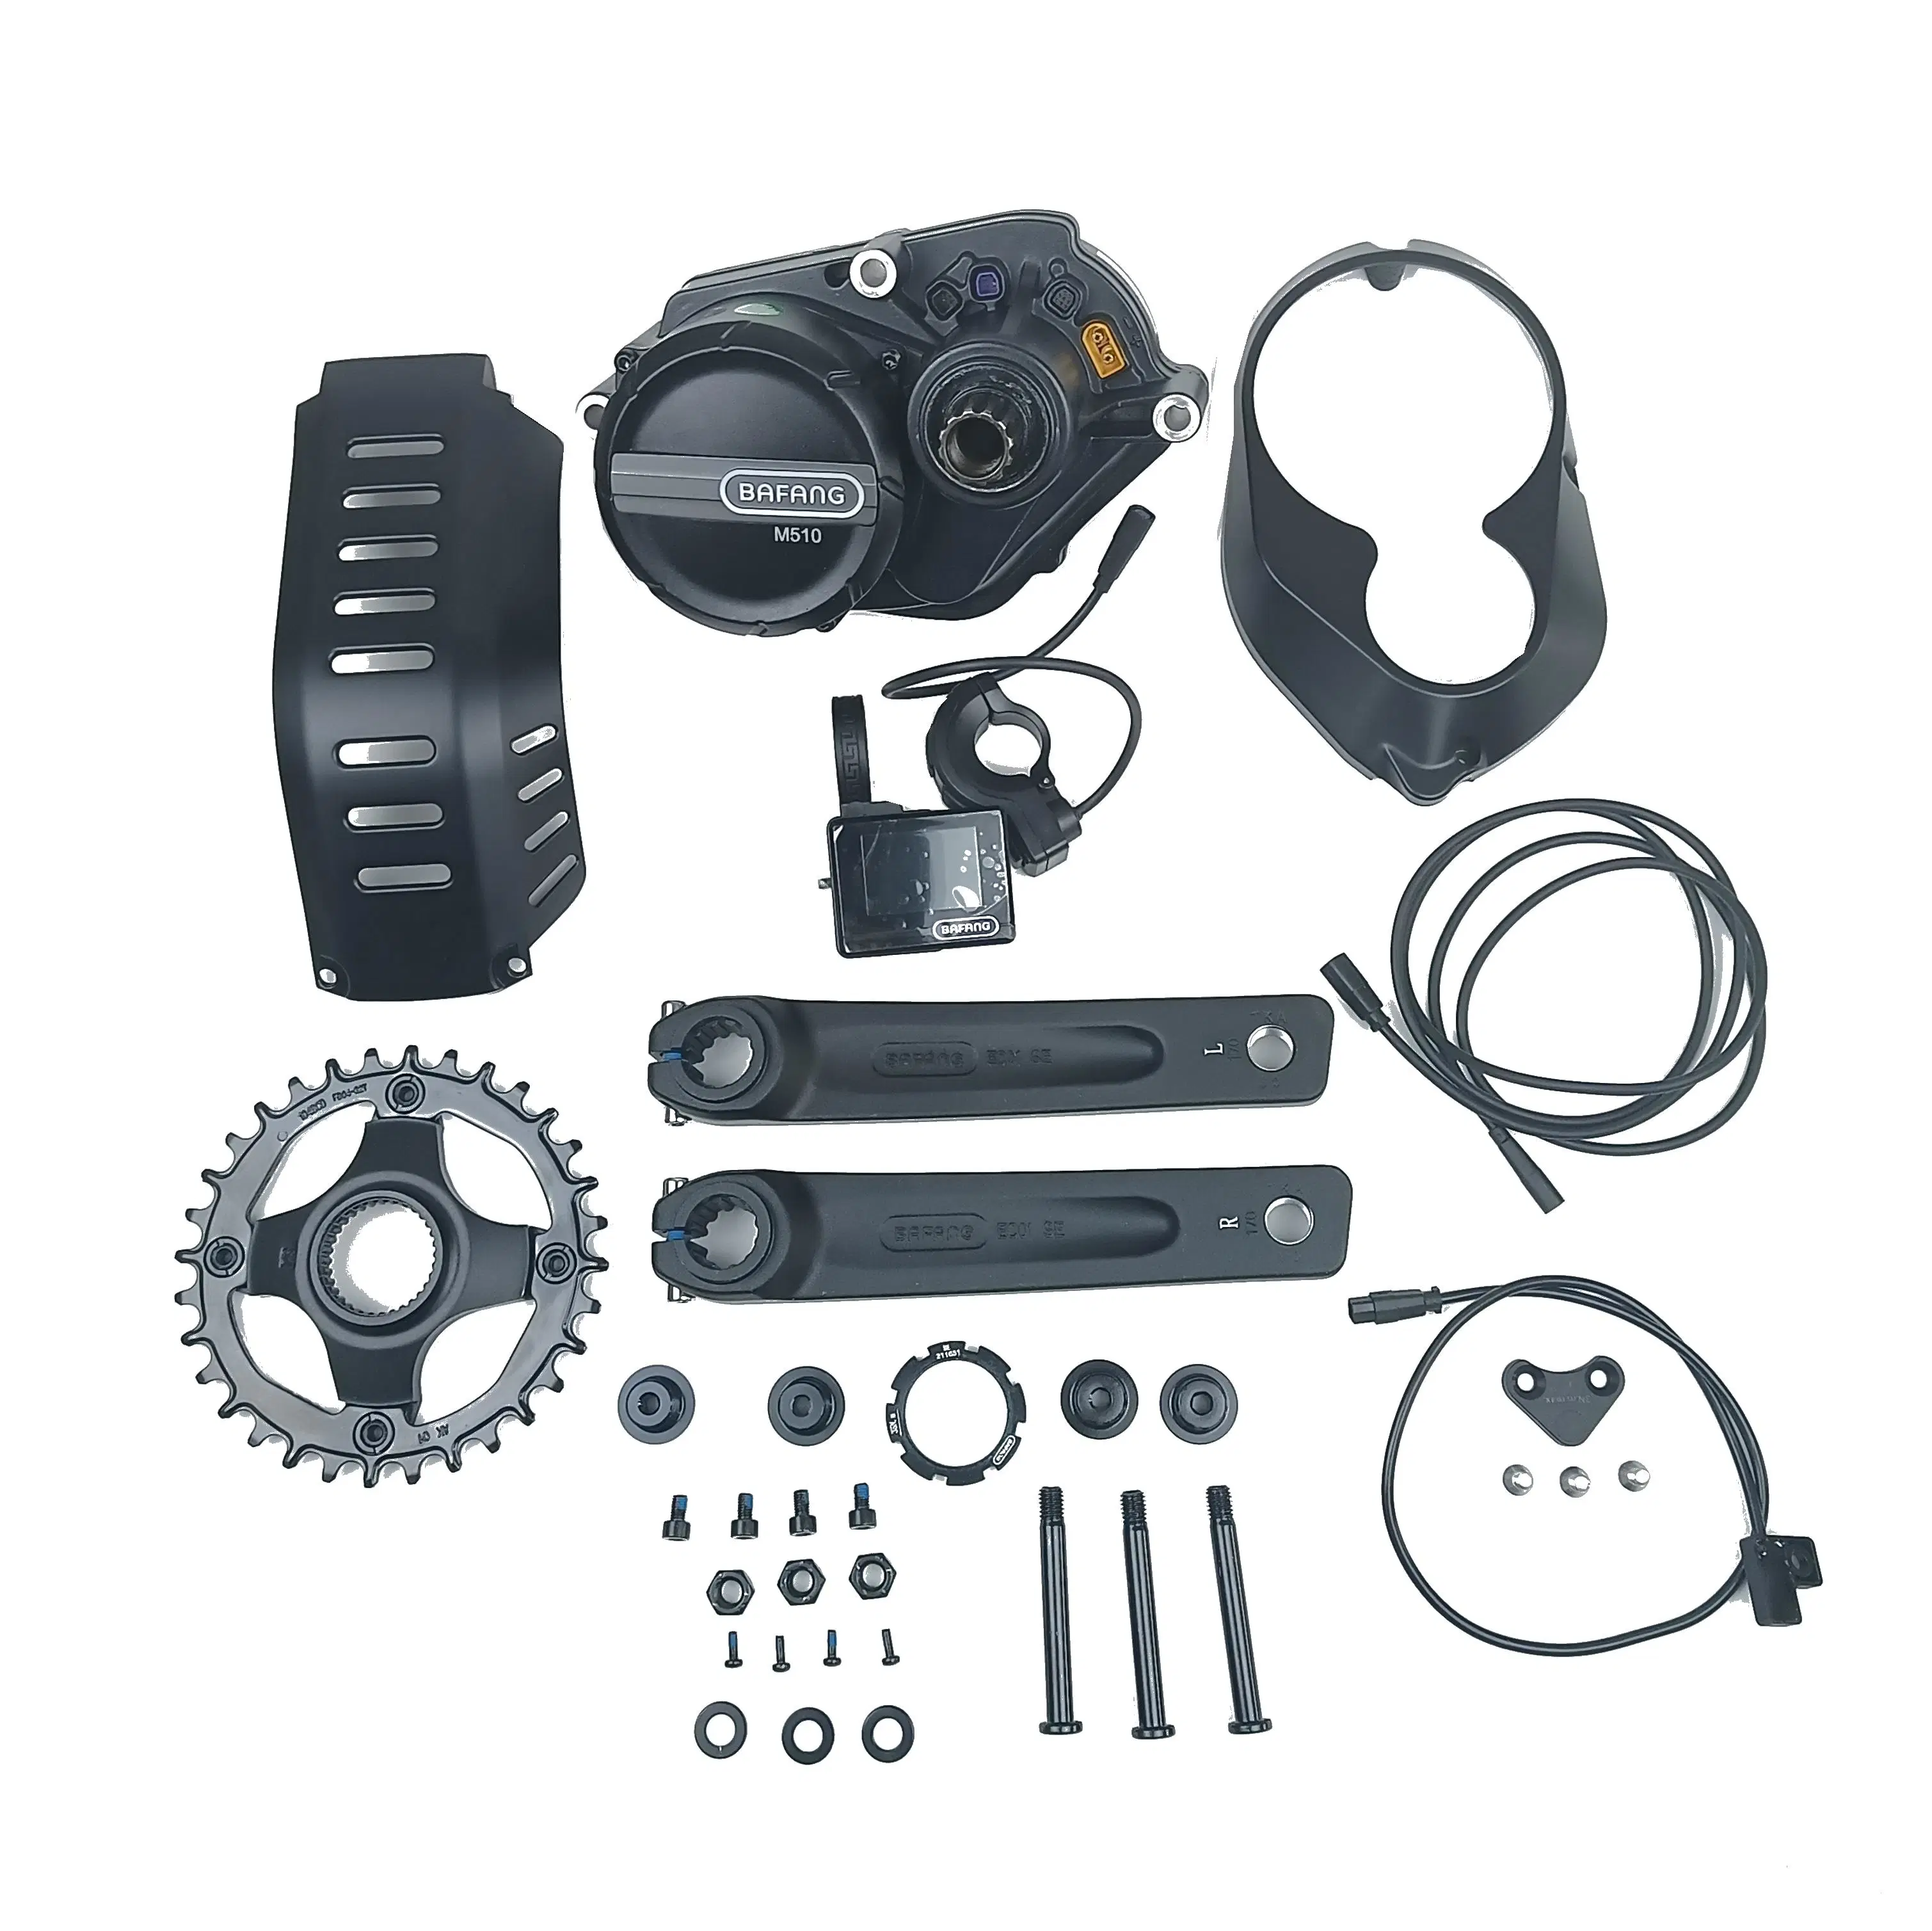 Bafang M510 G522 36V/43V/48V 250W MID Drive Motor Electric Bike Conversion Kit for MTB Ebike